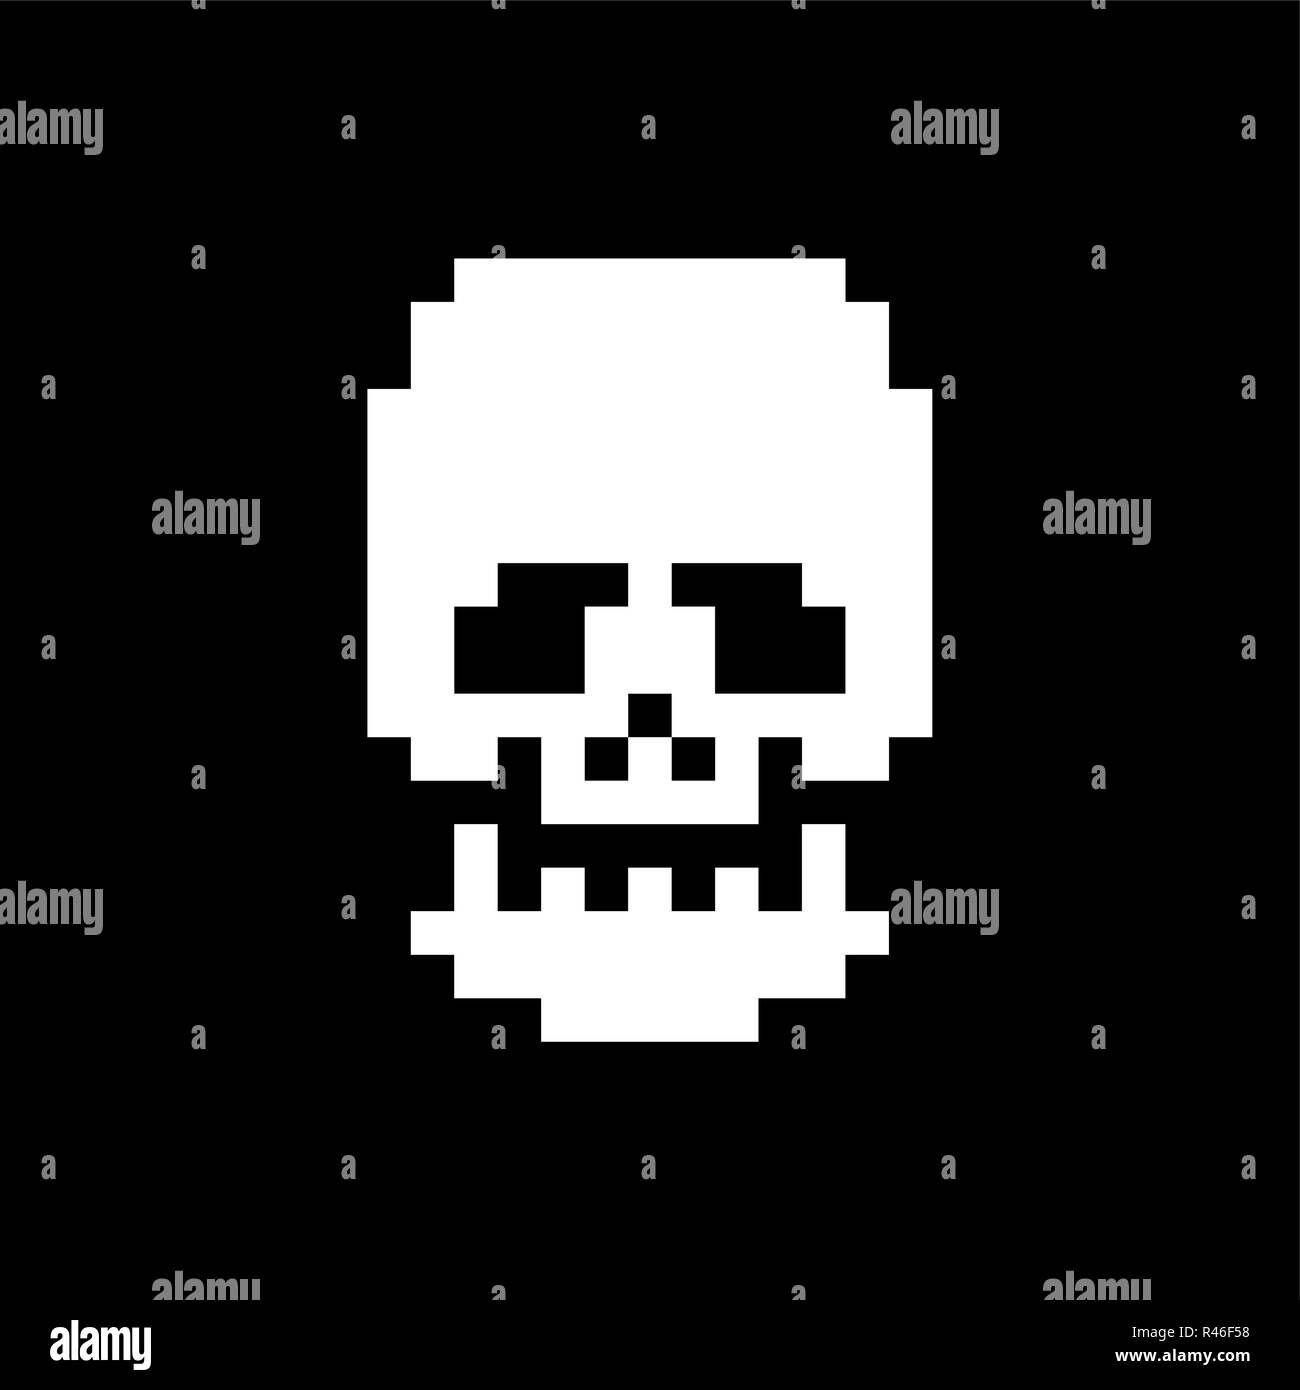 Skull pixel art. Bones anatomy 8 bit. Pixelate Human Skeleton system 16bit. Old game computer graphics style Stock Vector